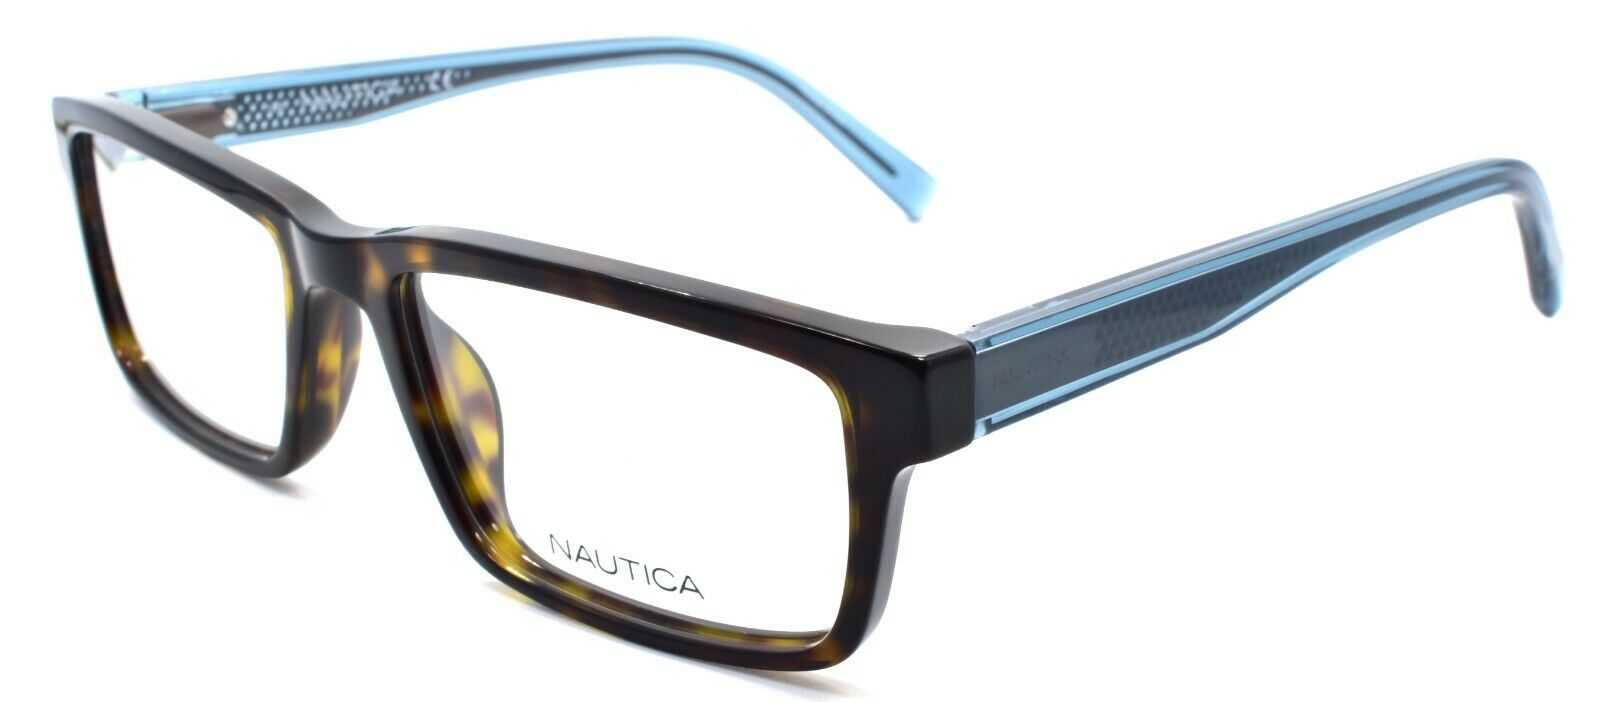 1-Nautica N8140 206 Men's Eyeglasses Frames 54-17-145 Dark Tortoise-688940459227-IKSpecs